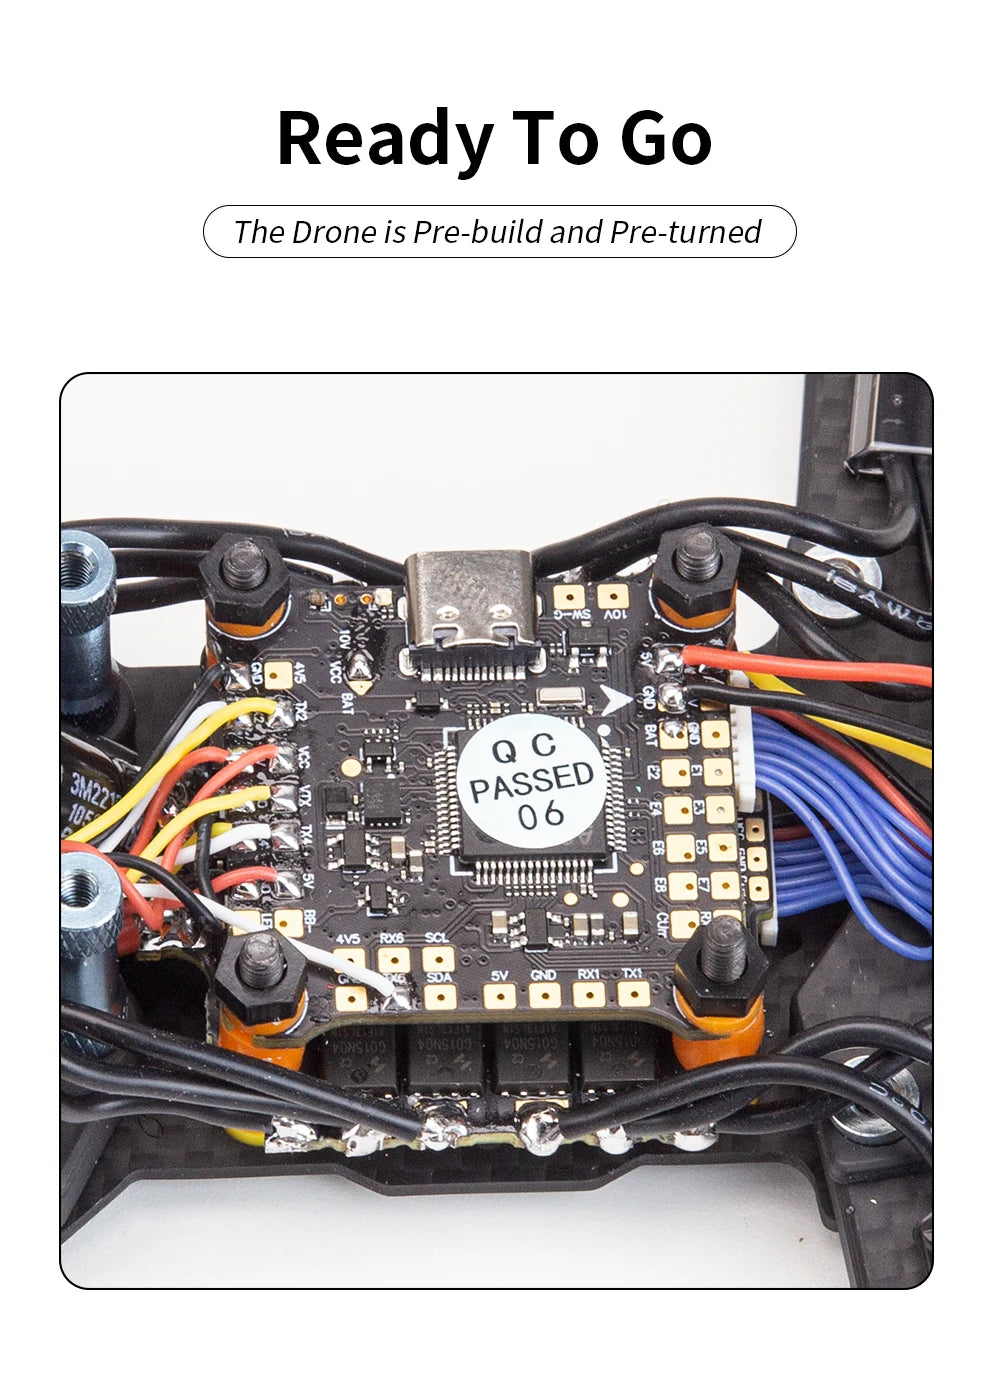 ATOMRC Insight7 Long Rang fpv Drone, build for Long